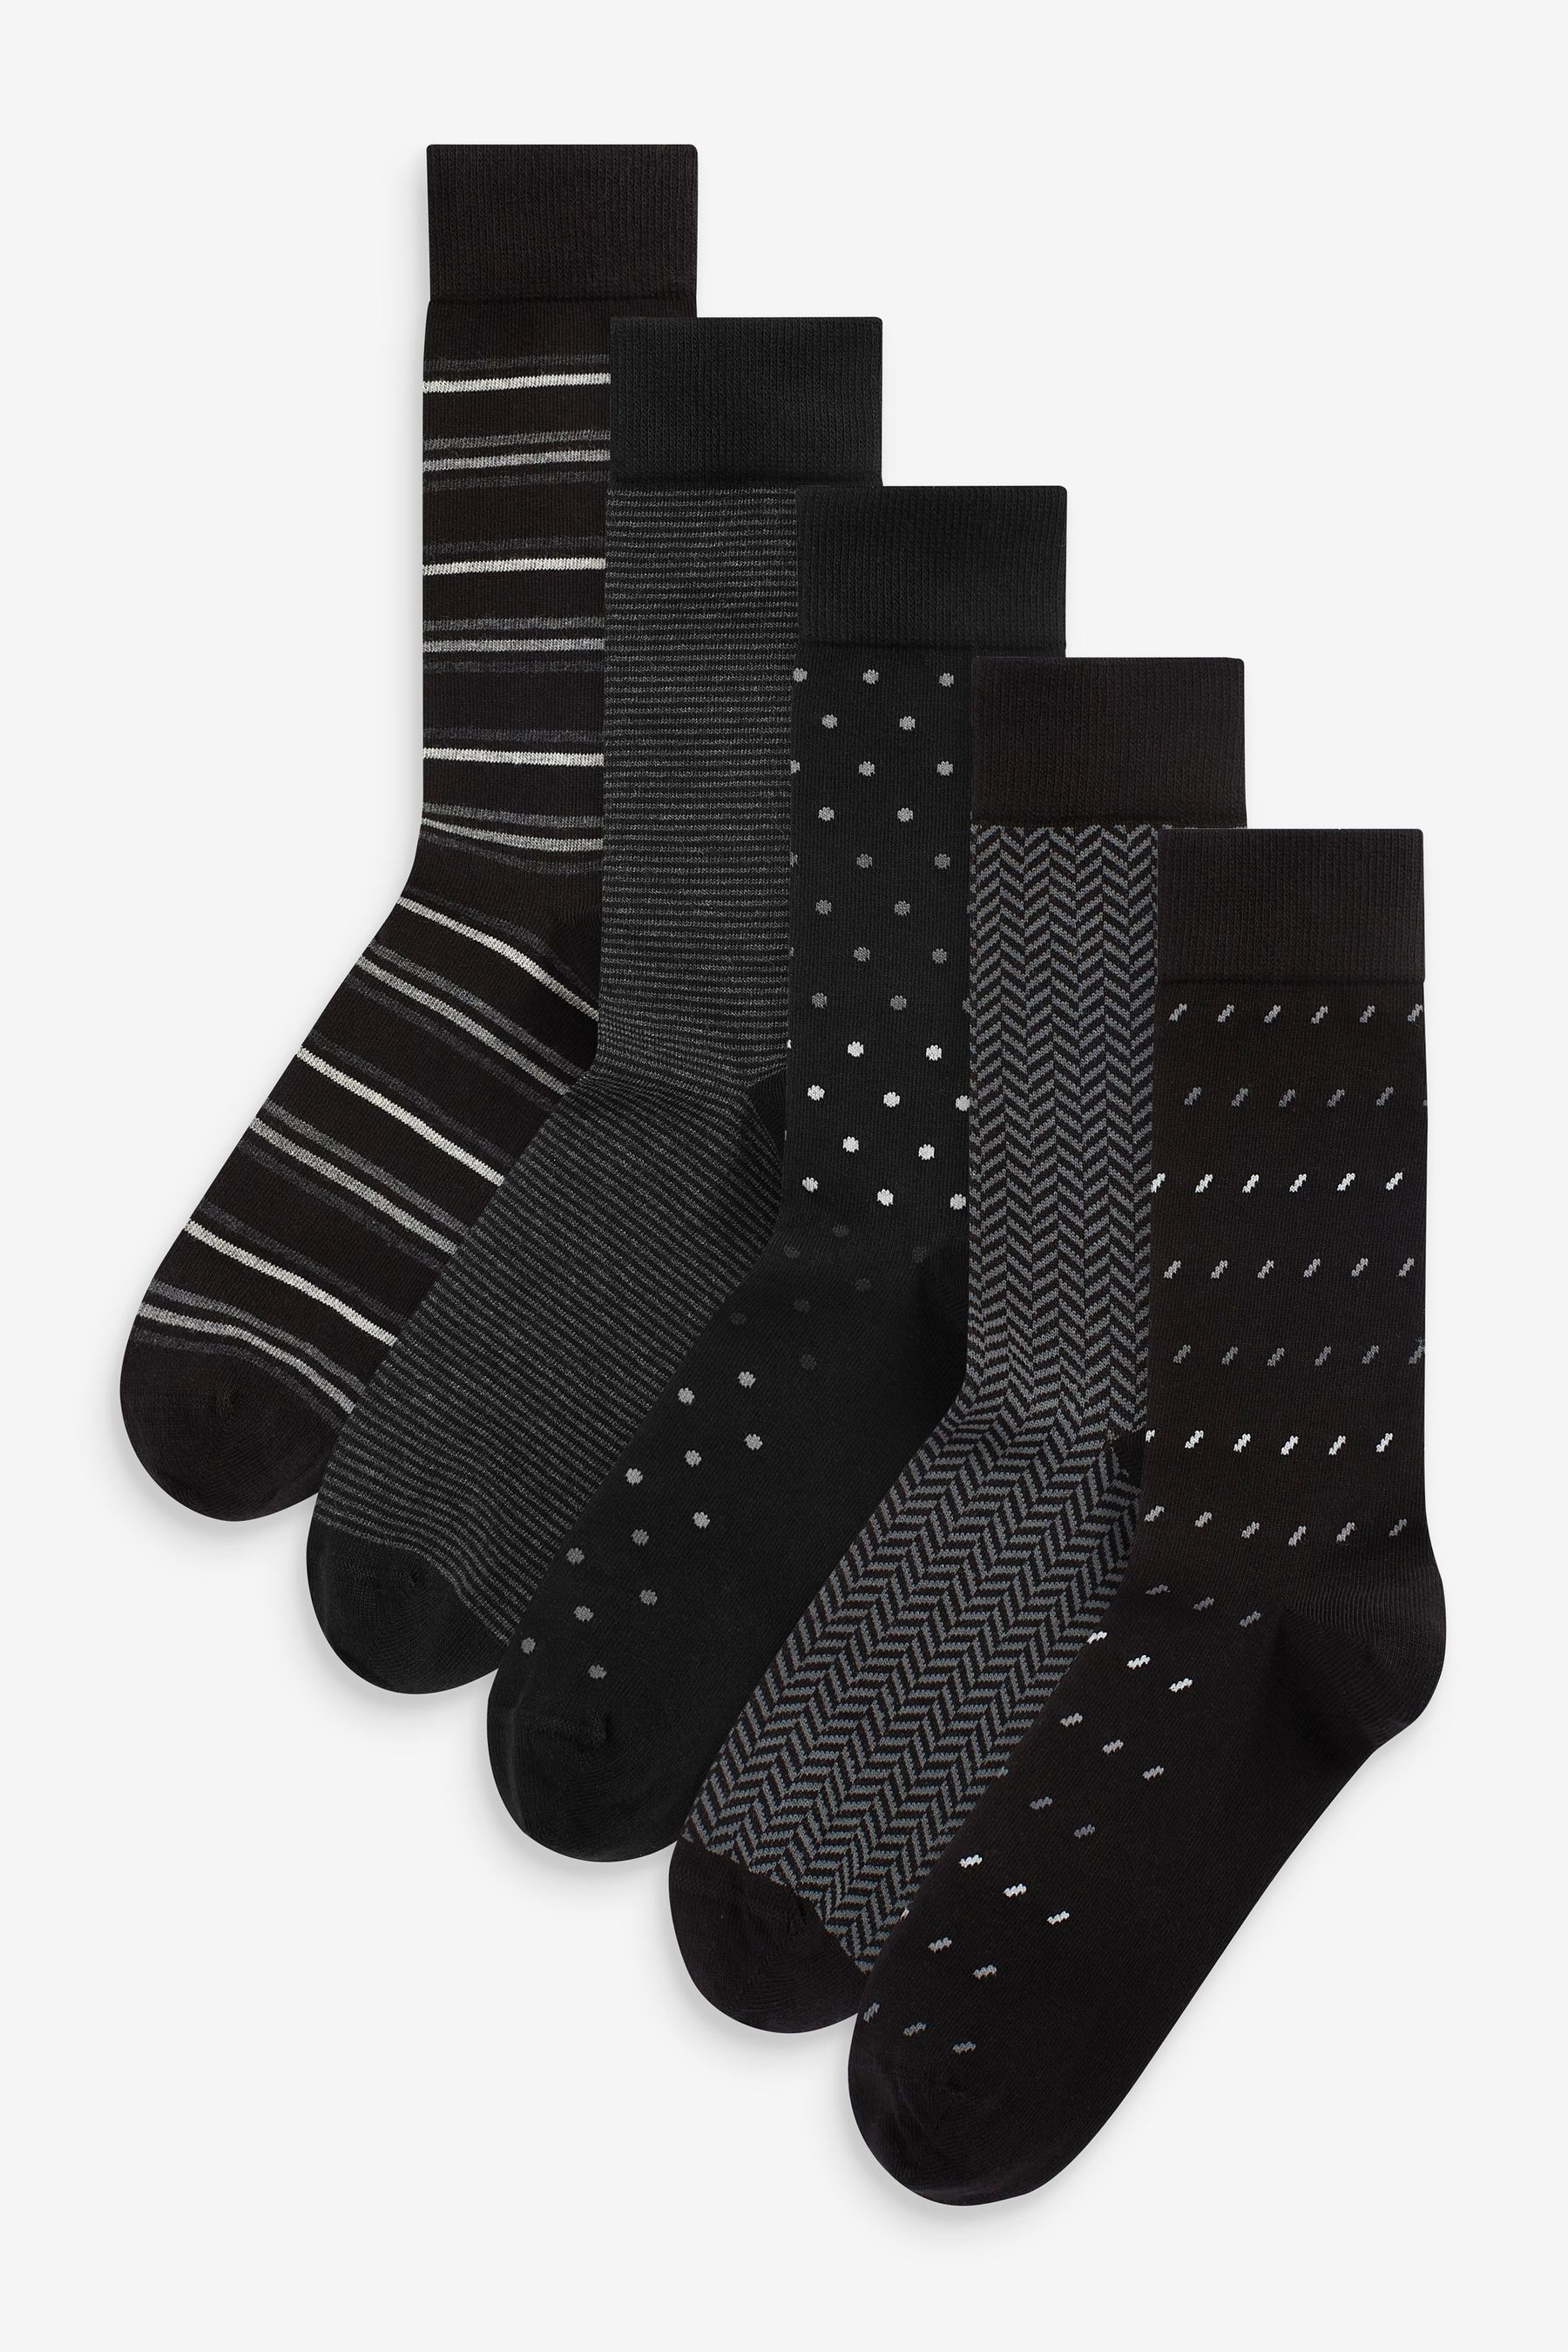 Buy Black/Grey Mix Pattern Smart Socks 5 Pack from the Next UK online shop